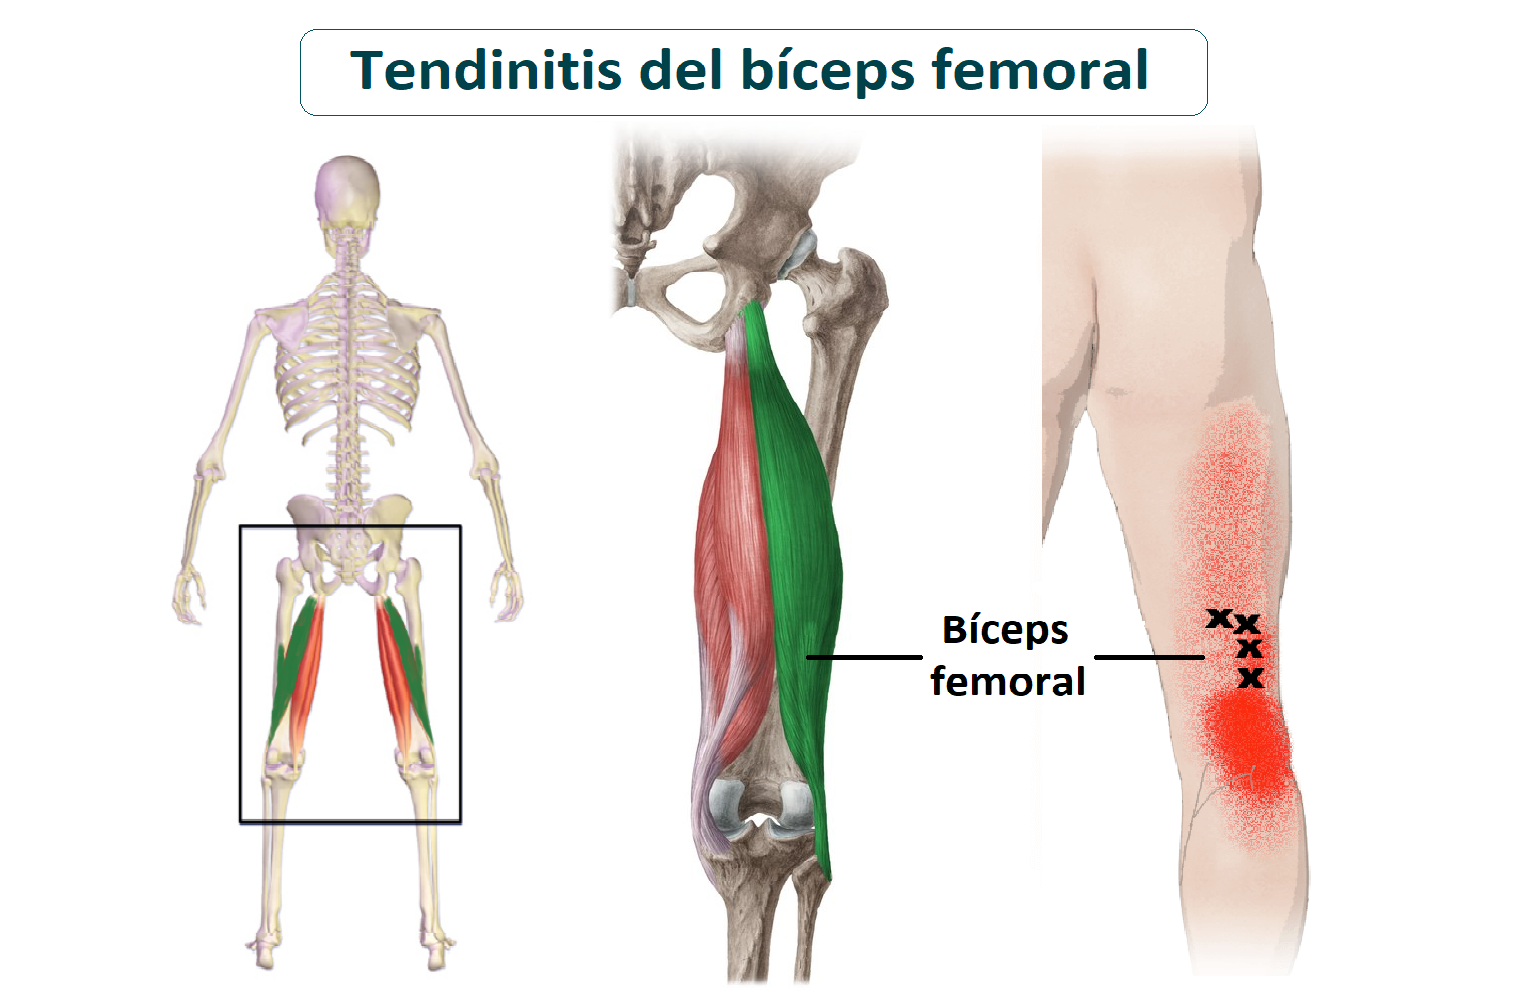 anatomia tendinitis de biceps femoral